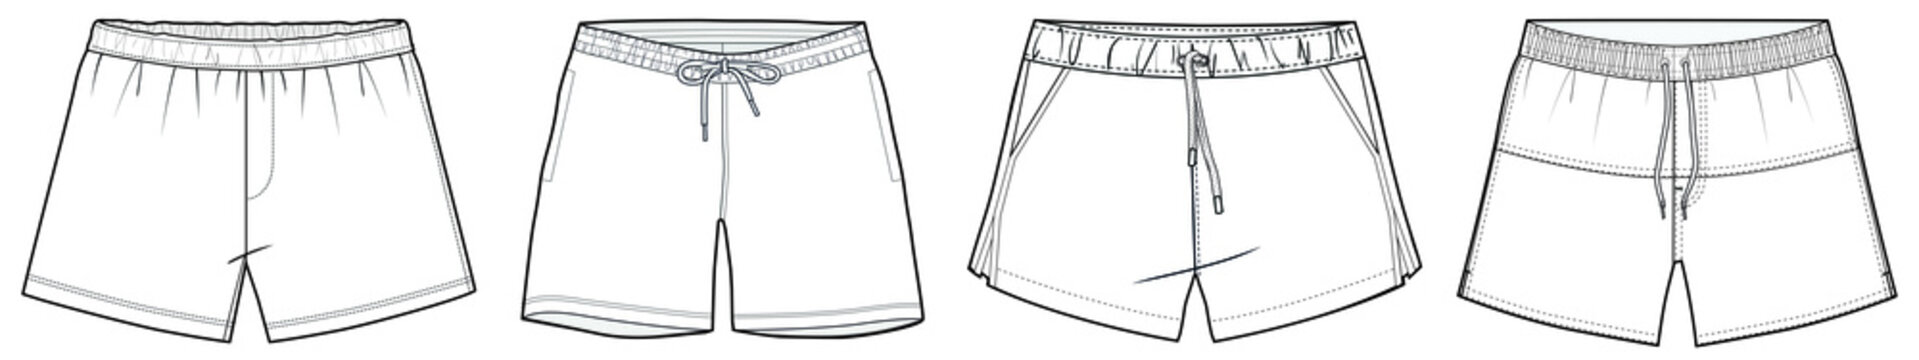 men's shorts technical drawing vector illustration. CAD mockup.